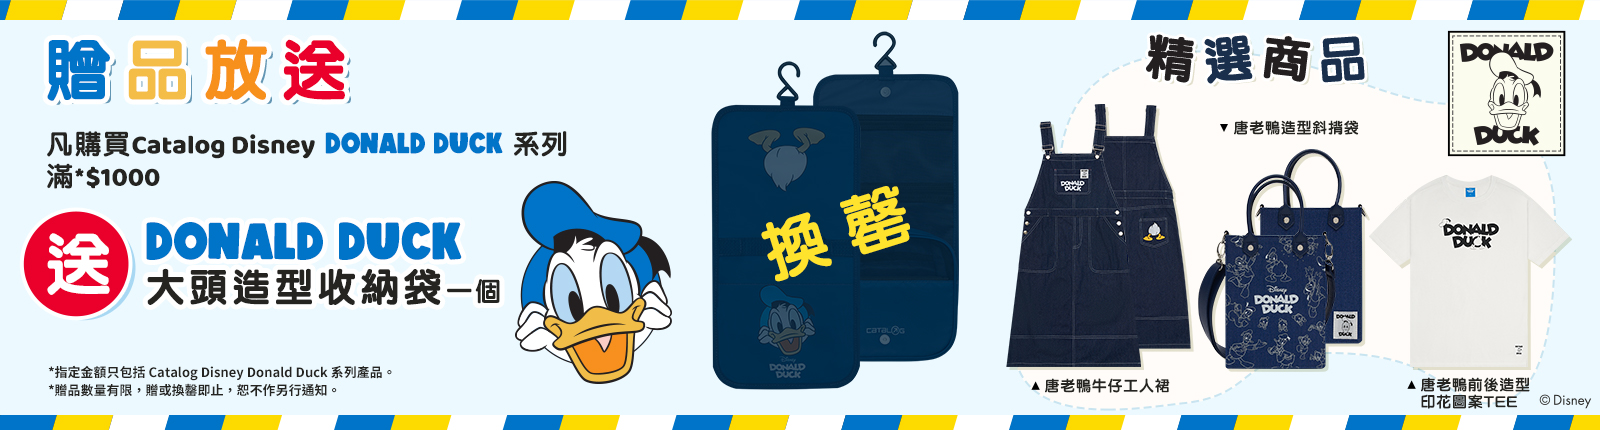 Catalog Disney Donald Duck系列